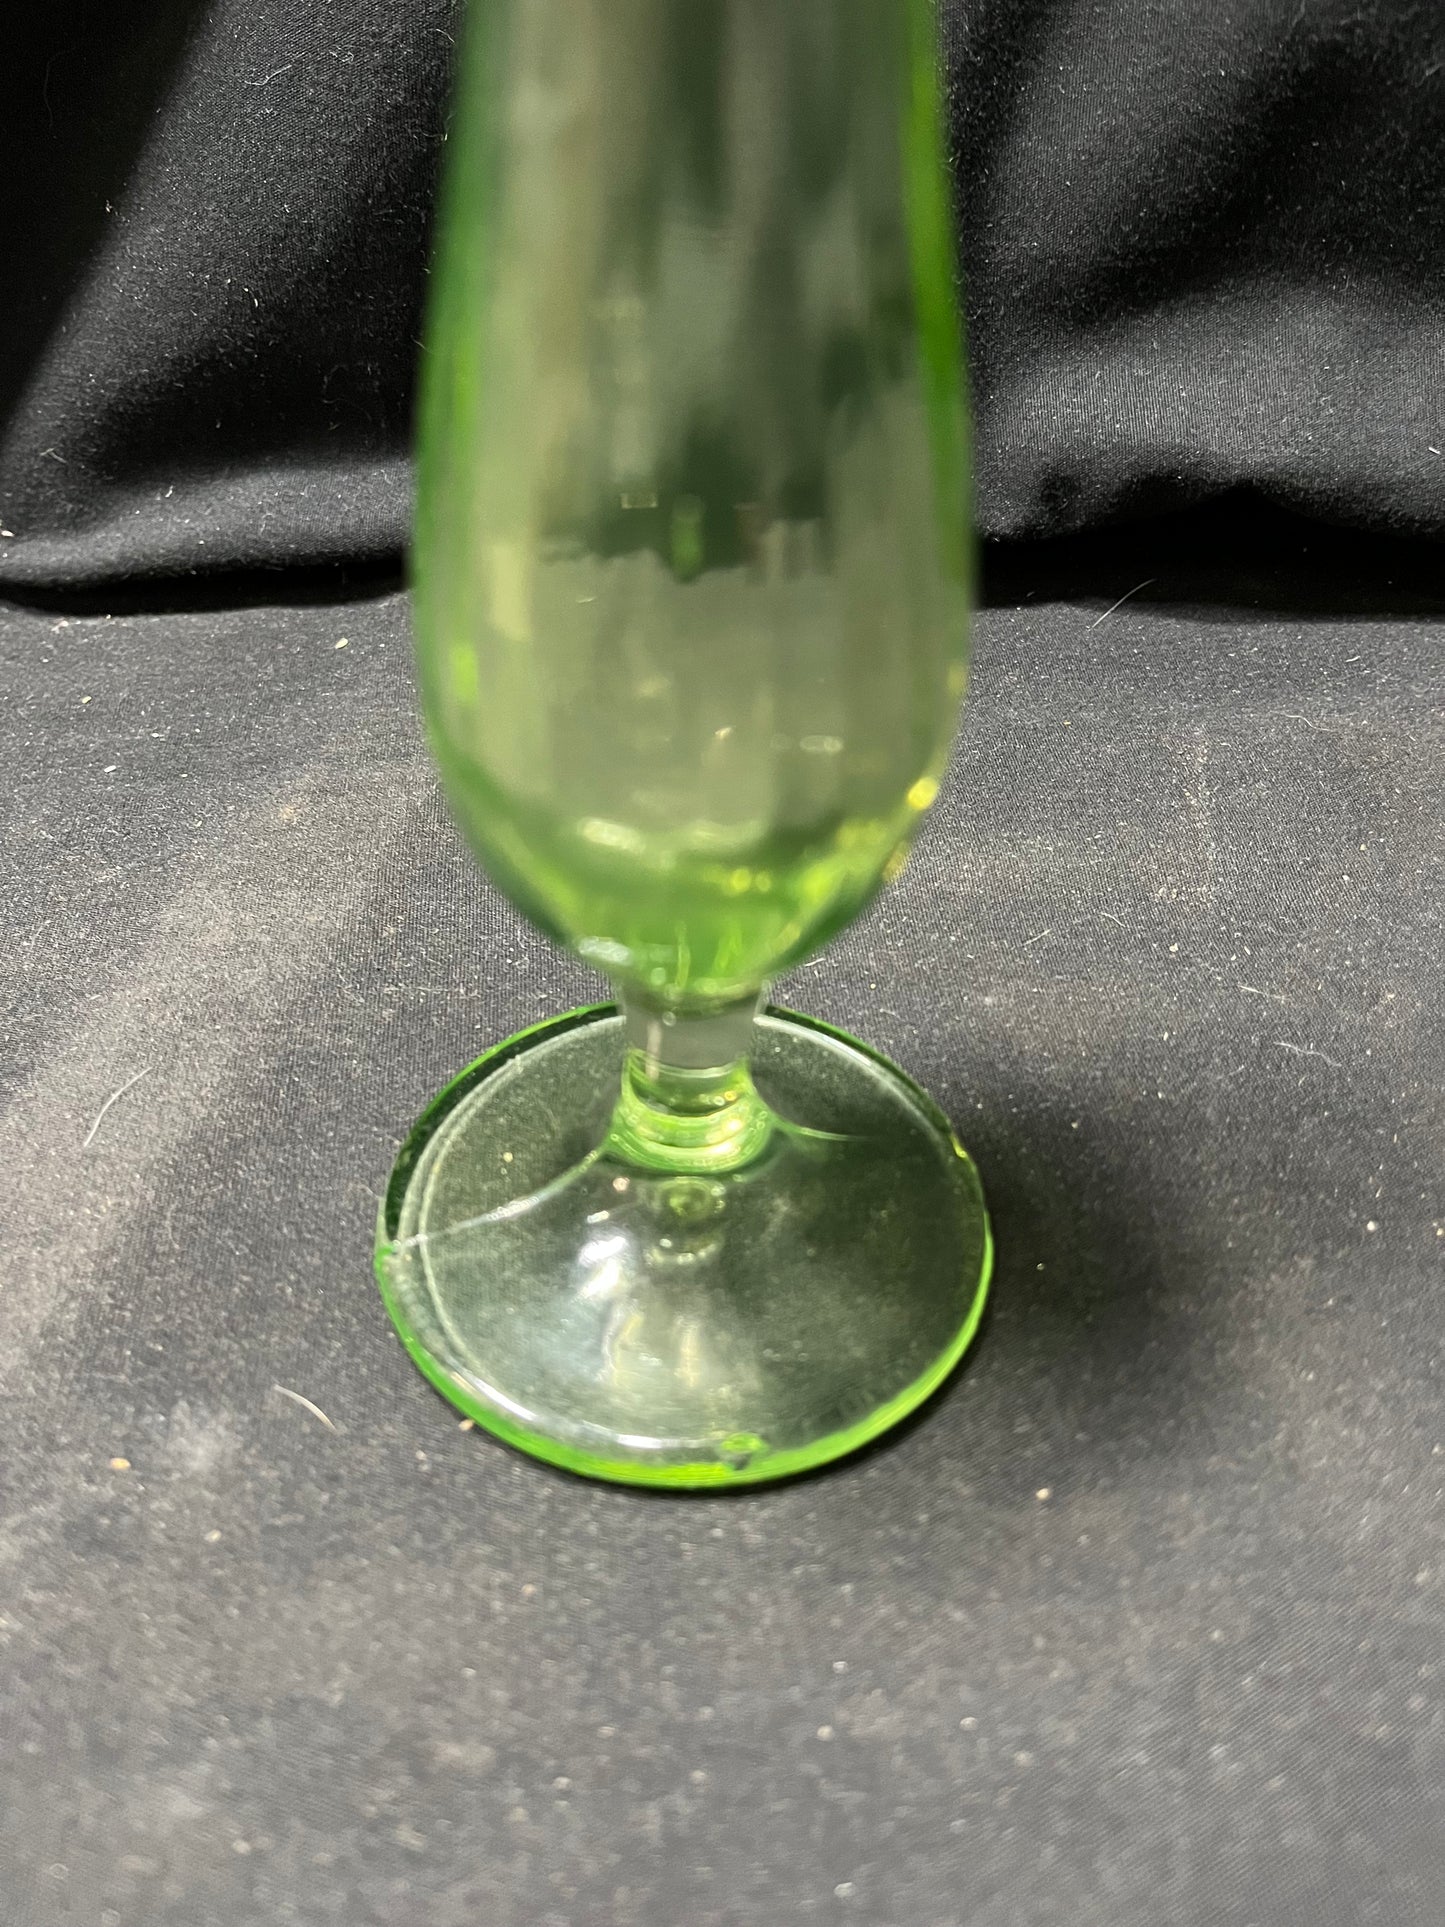 Swung Glass Bud Vase, Uranium Glass, Vintage